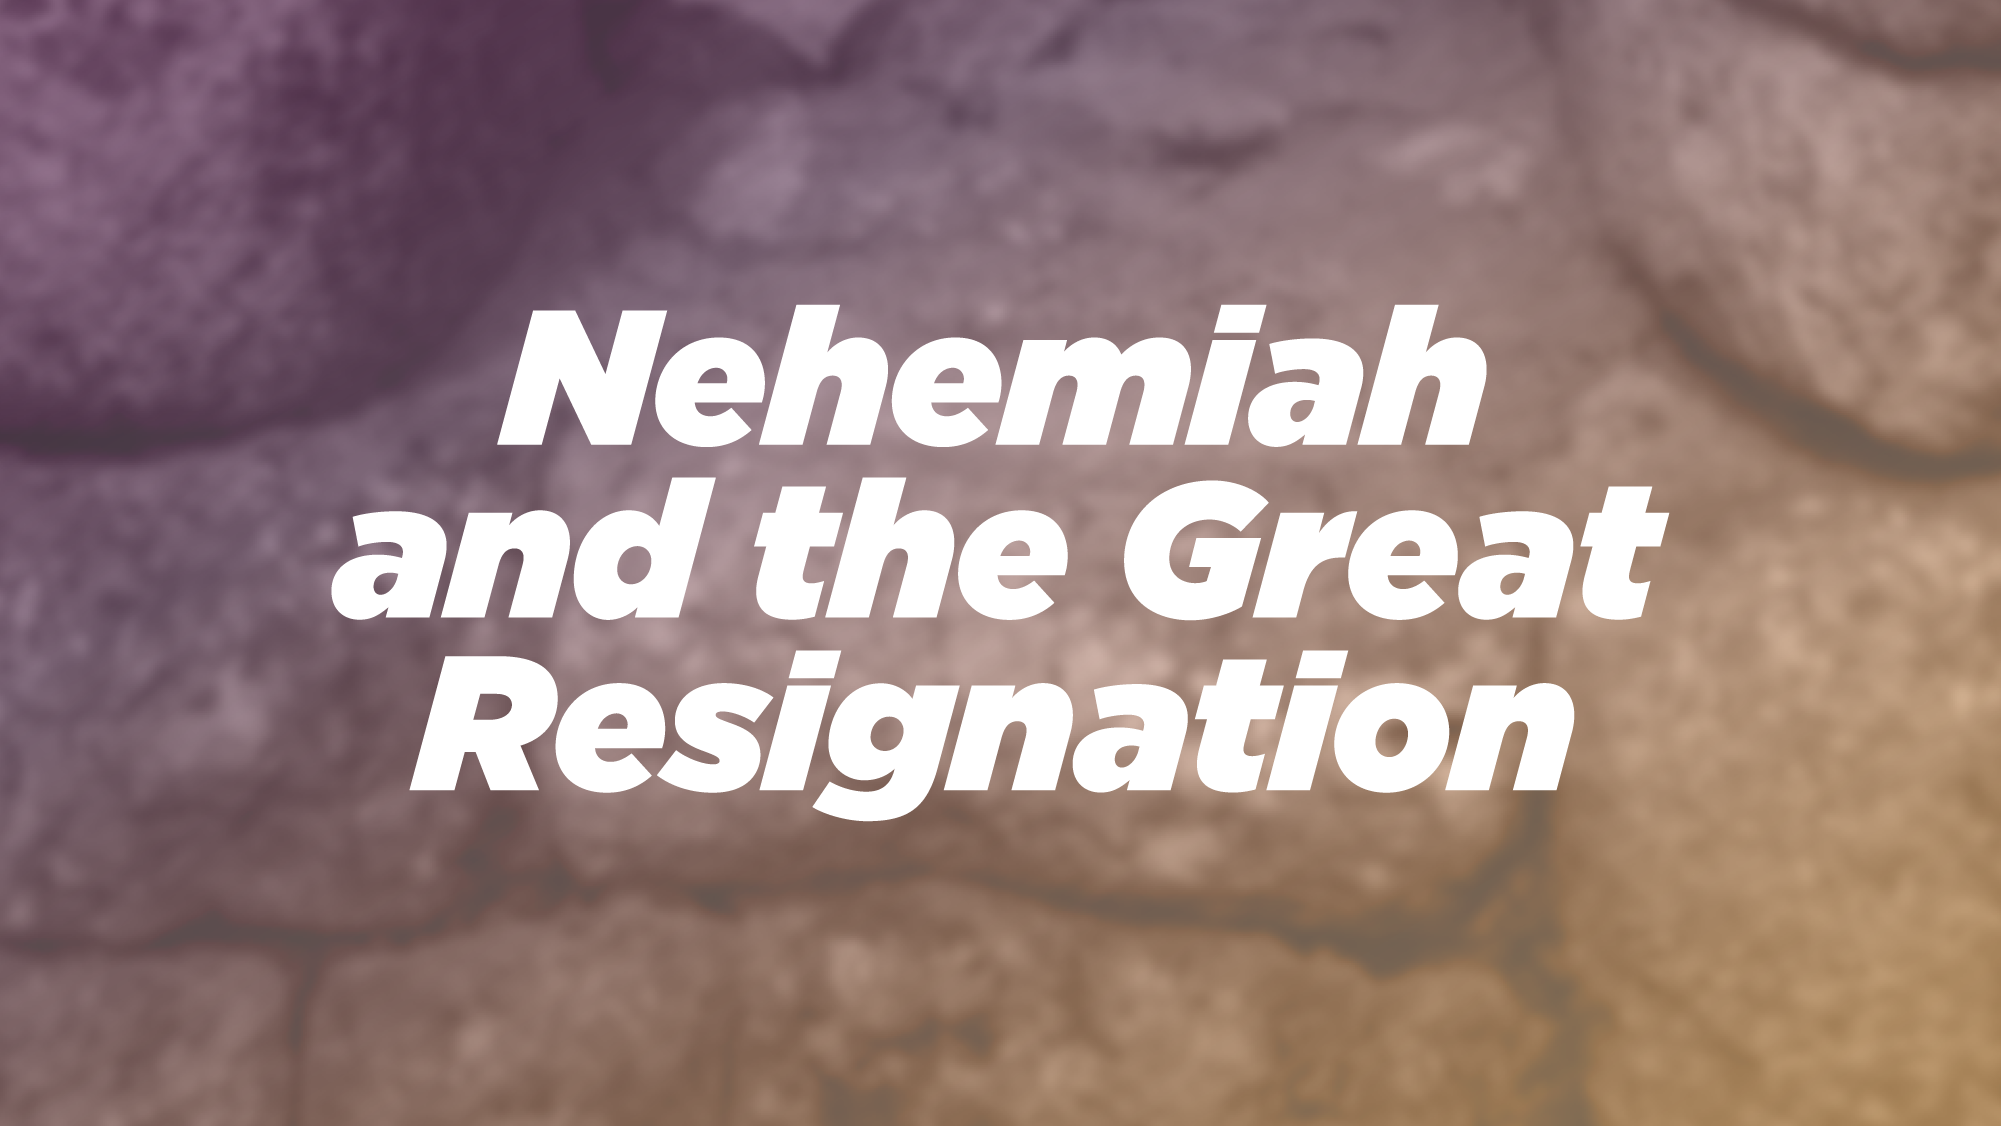 Nehemiah and the Great Resignation